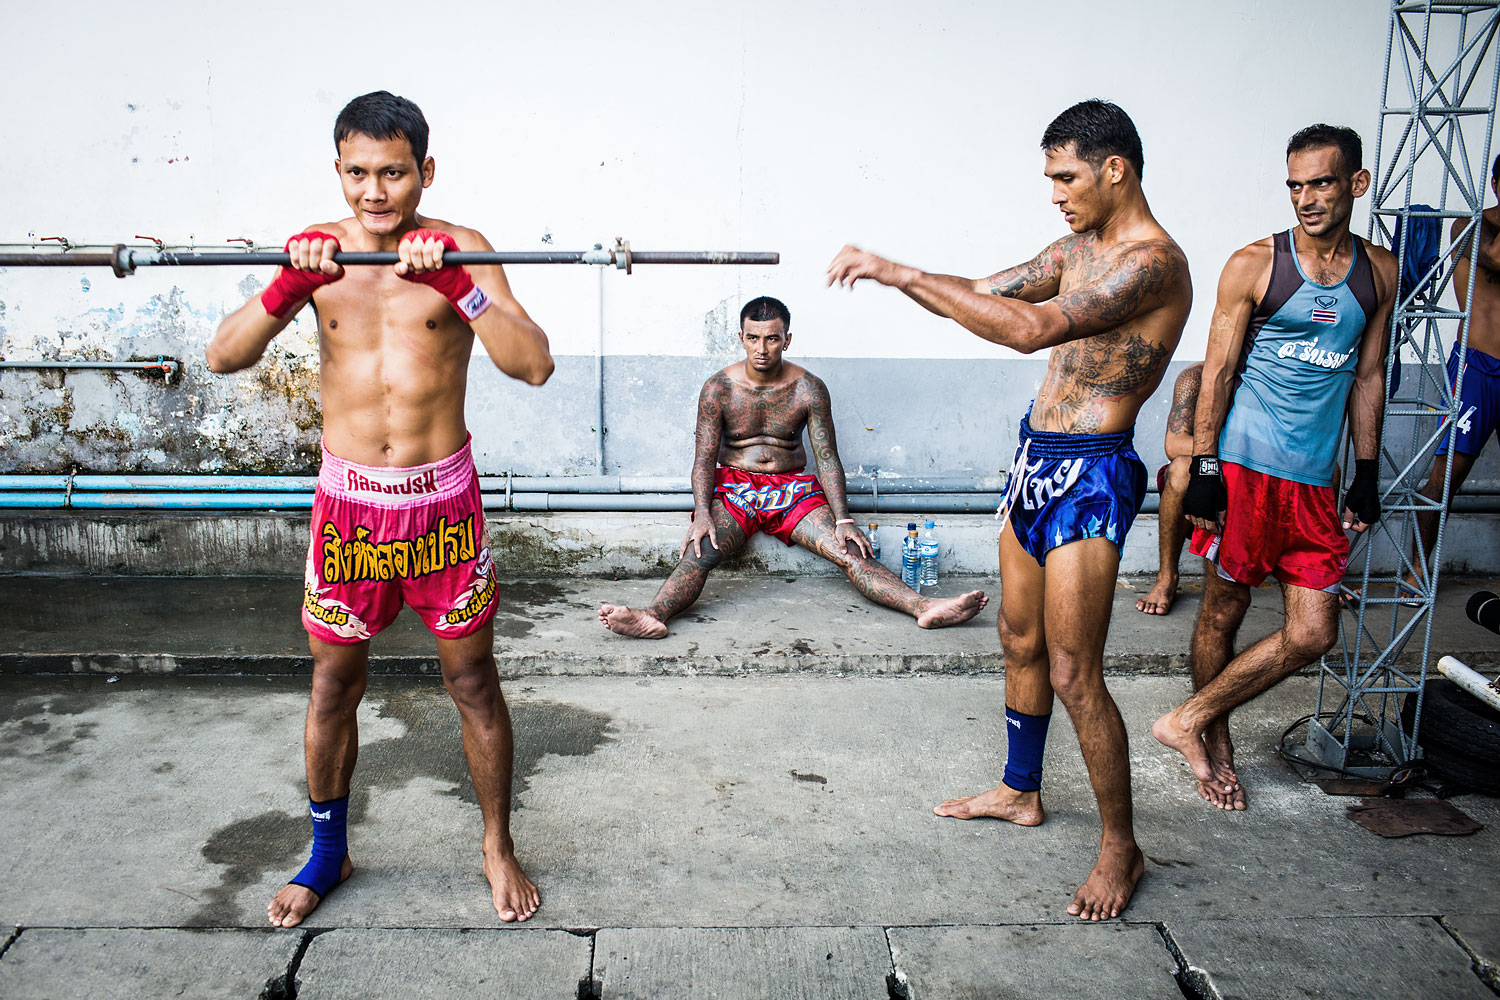 Klong Prem prison Boxing program in Bangkok, Thailand.